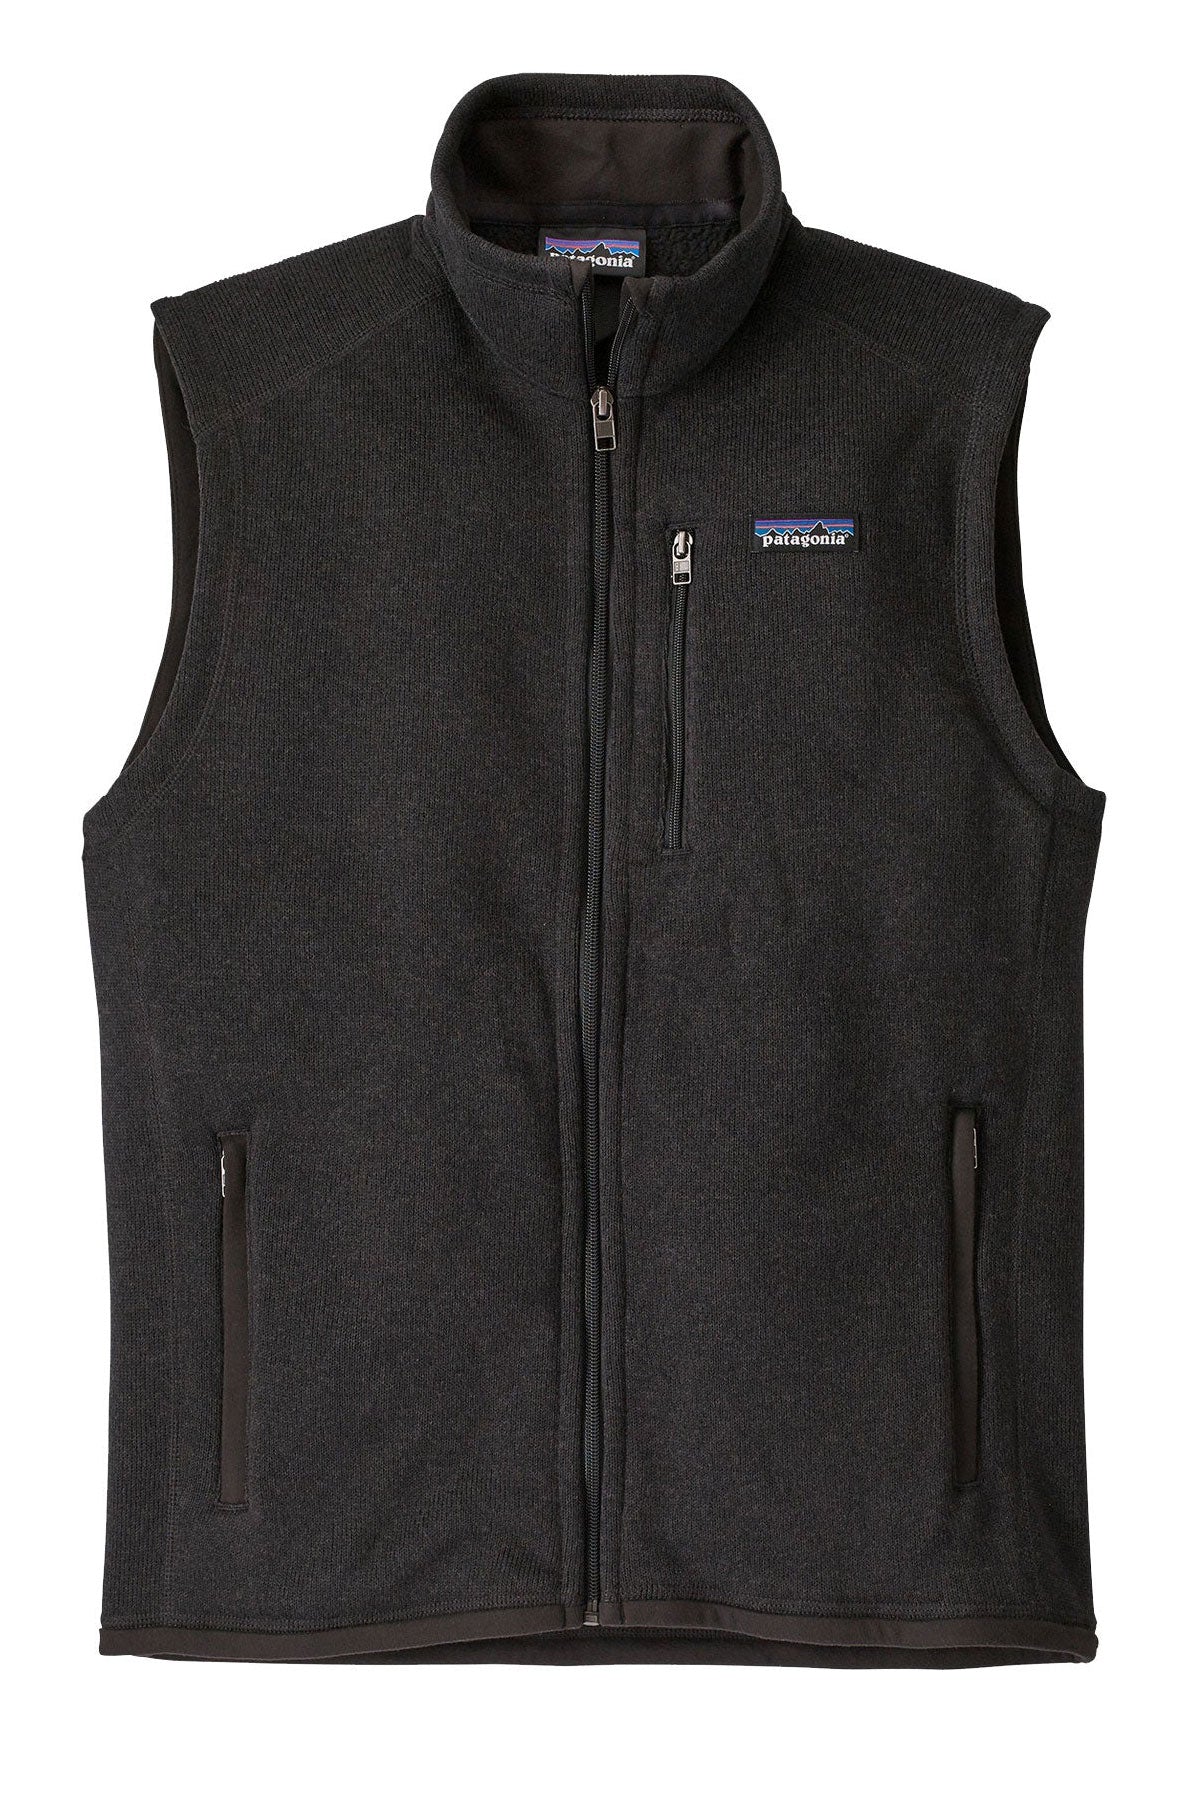 Patagonia Mens Better Sweater Fleece Customized Vests, Black